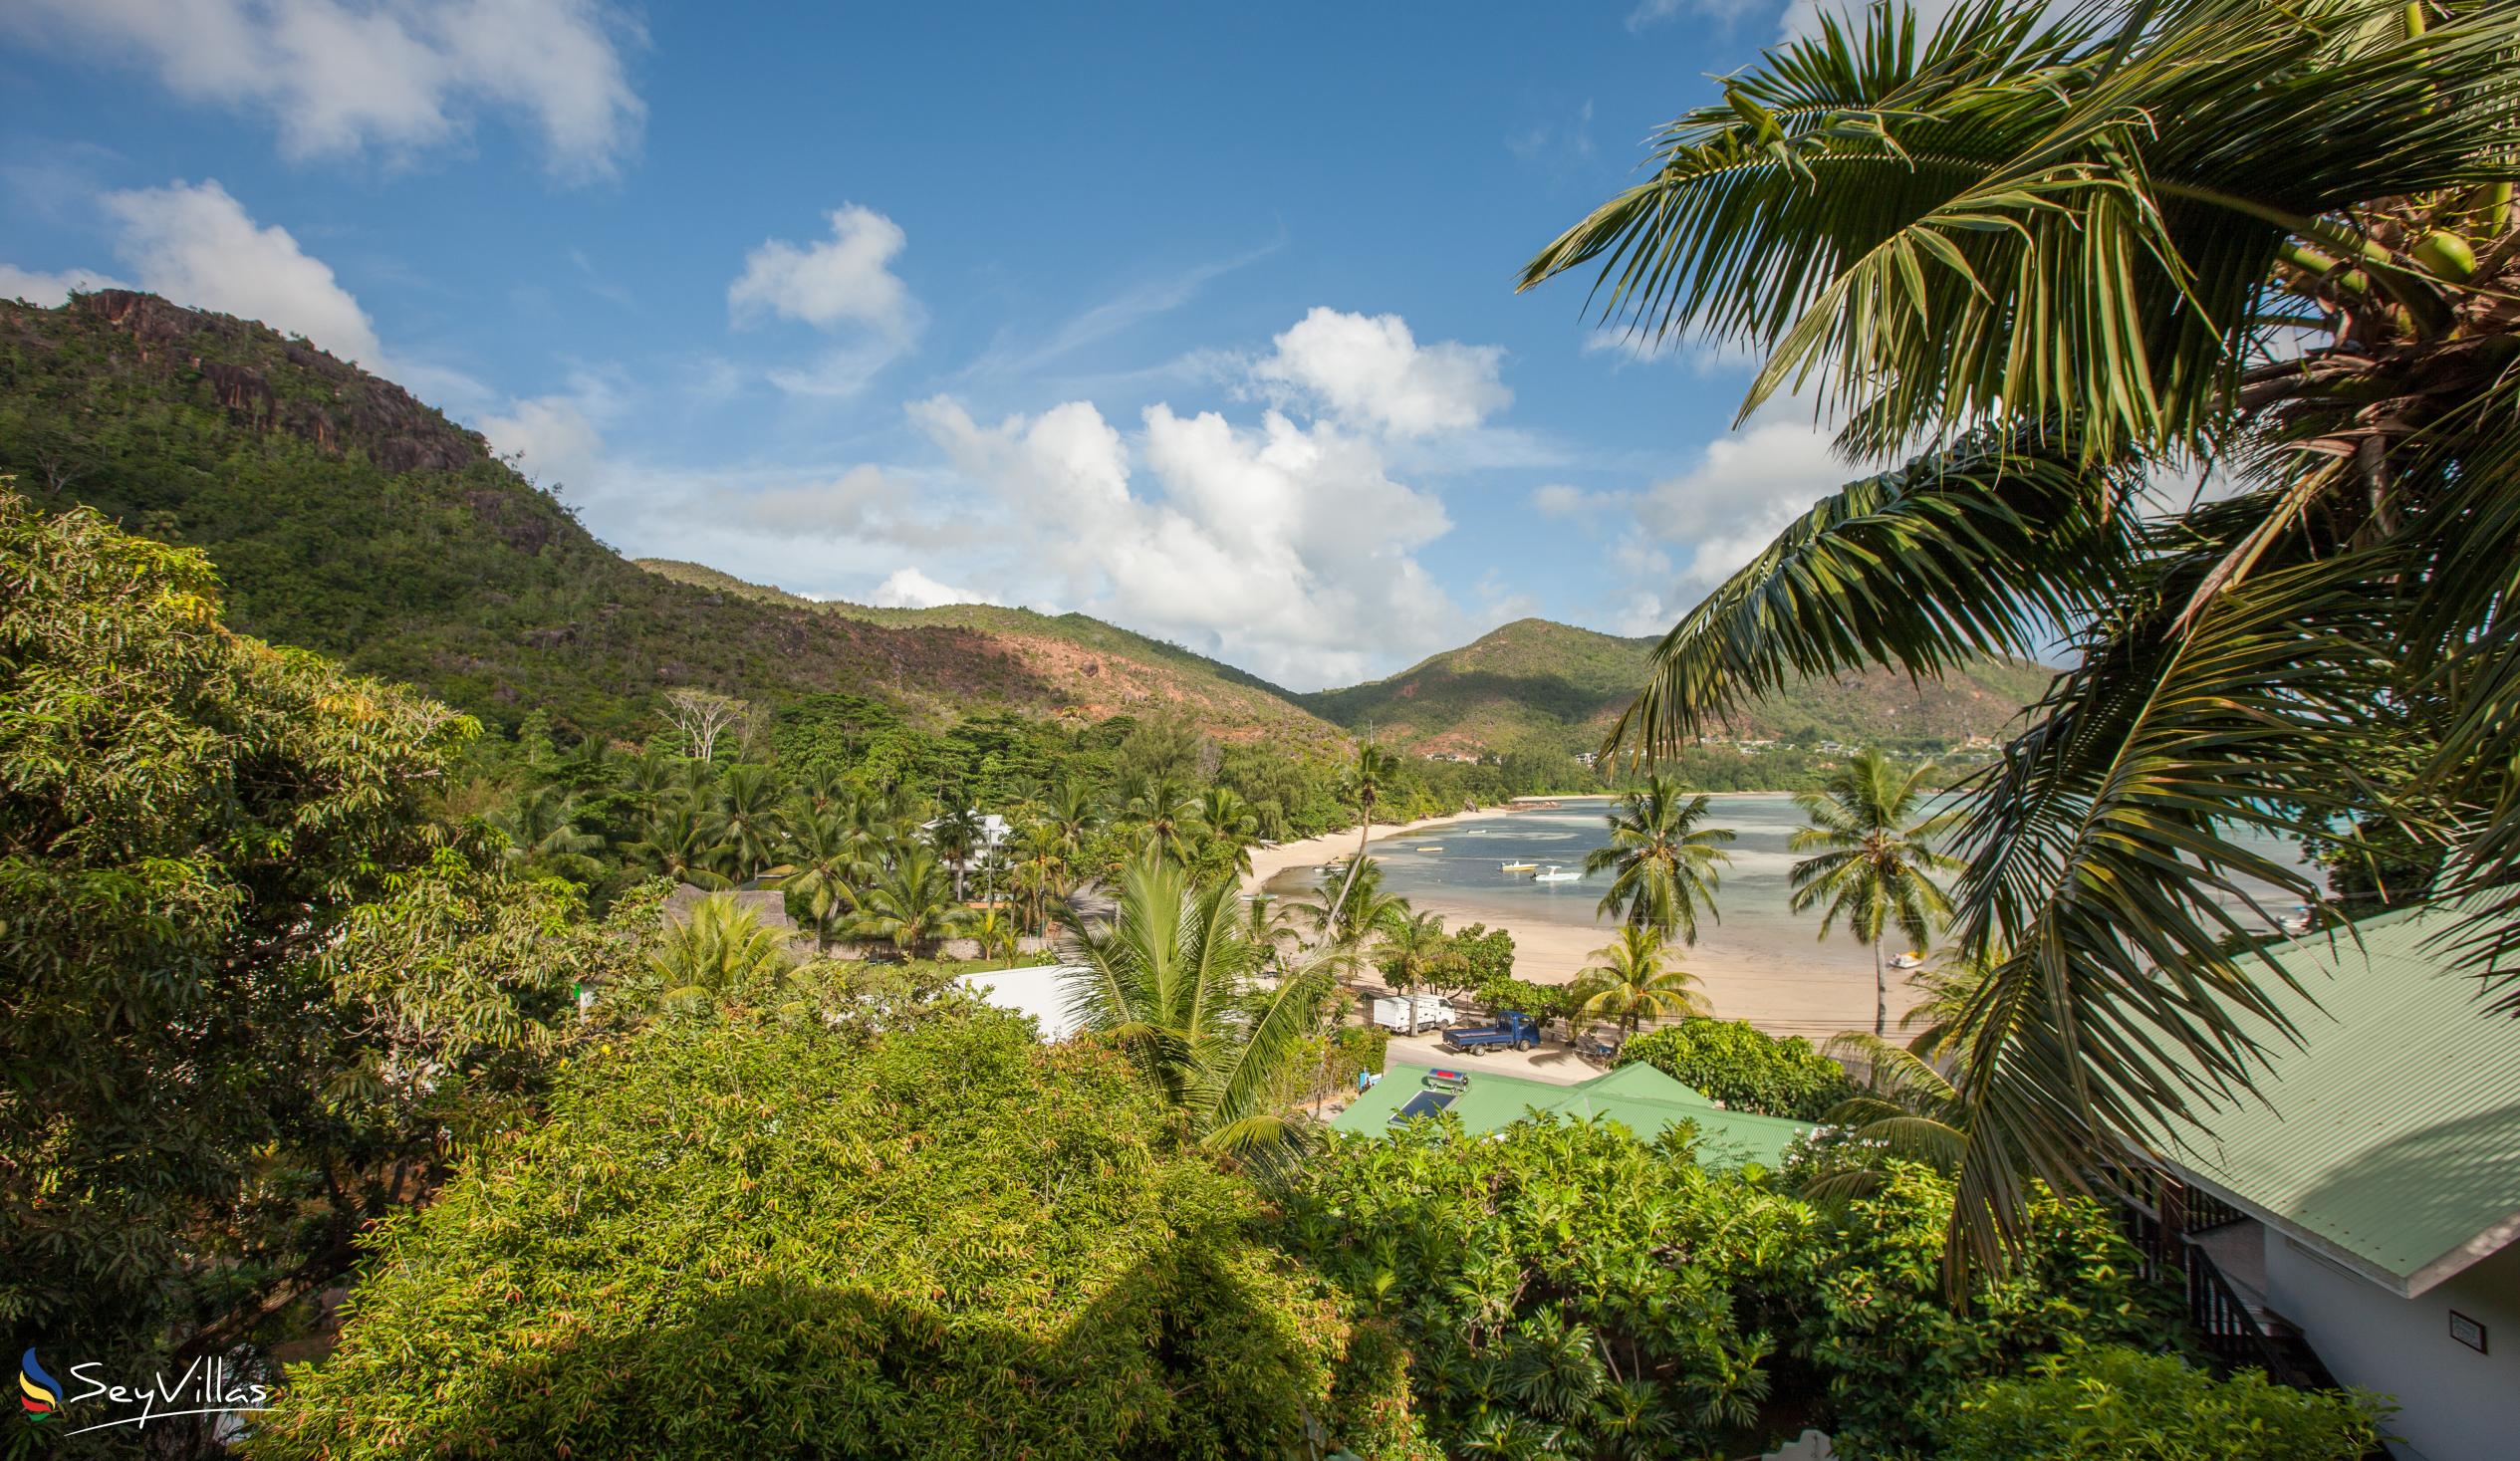 Foto 23: Sea View Lodge - Location - Praslin (Seychelles)